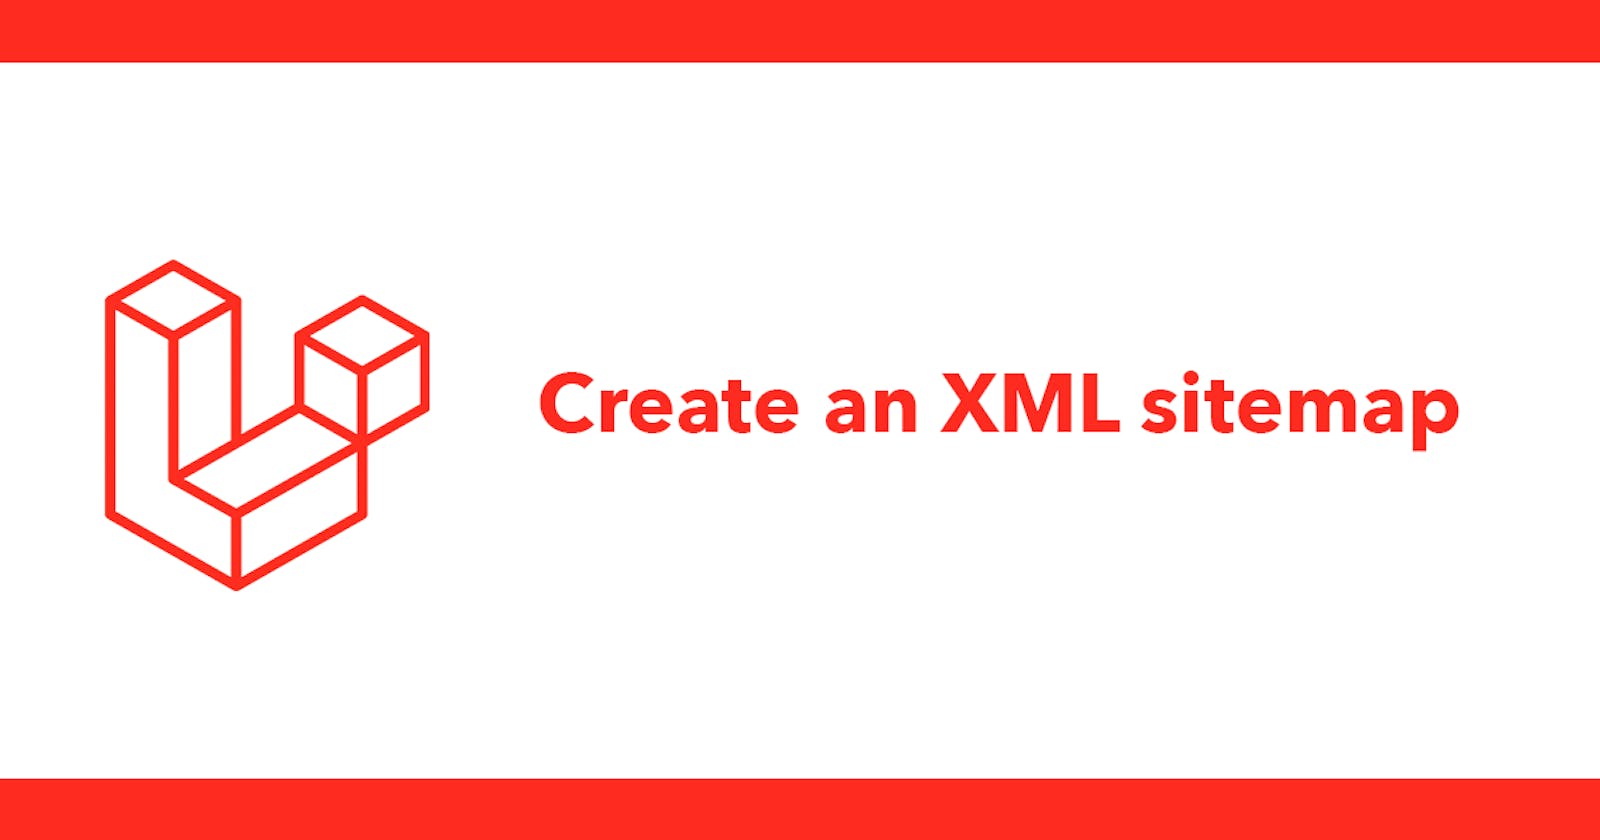 Create an XML sitemap